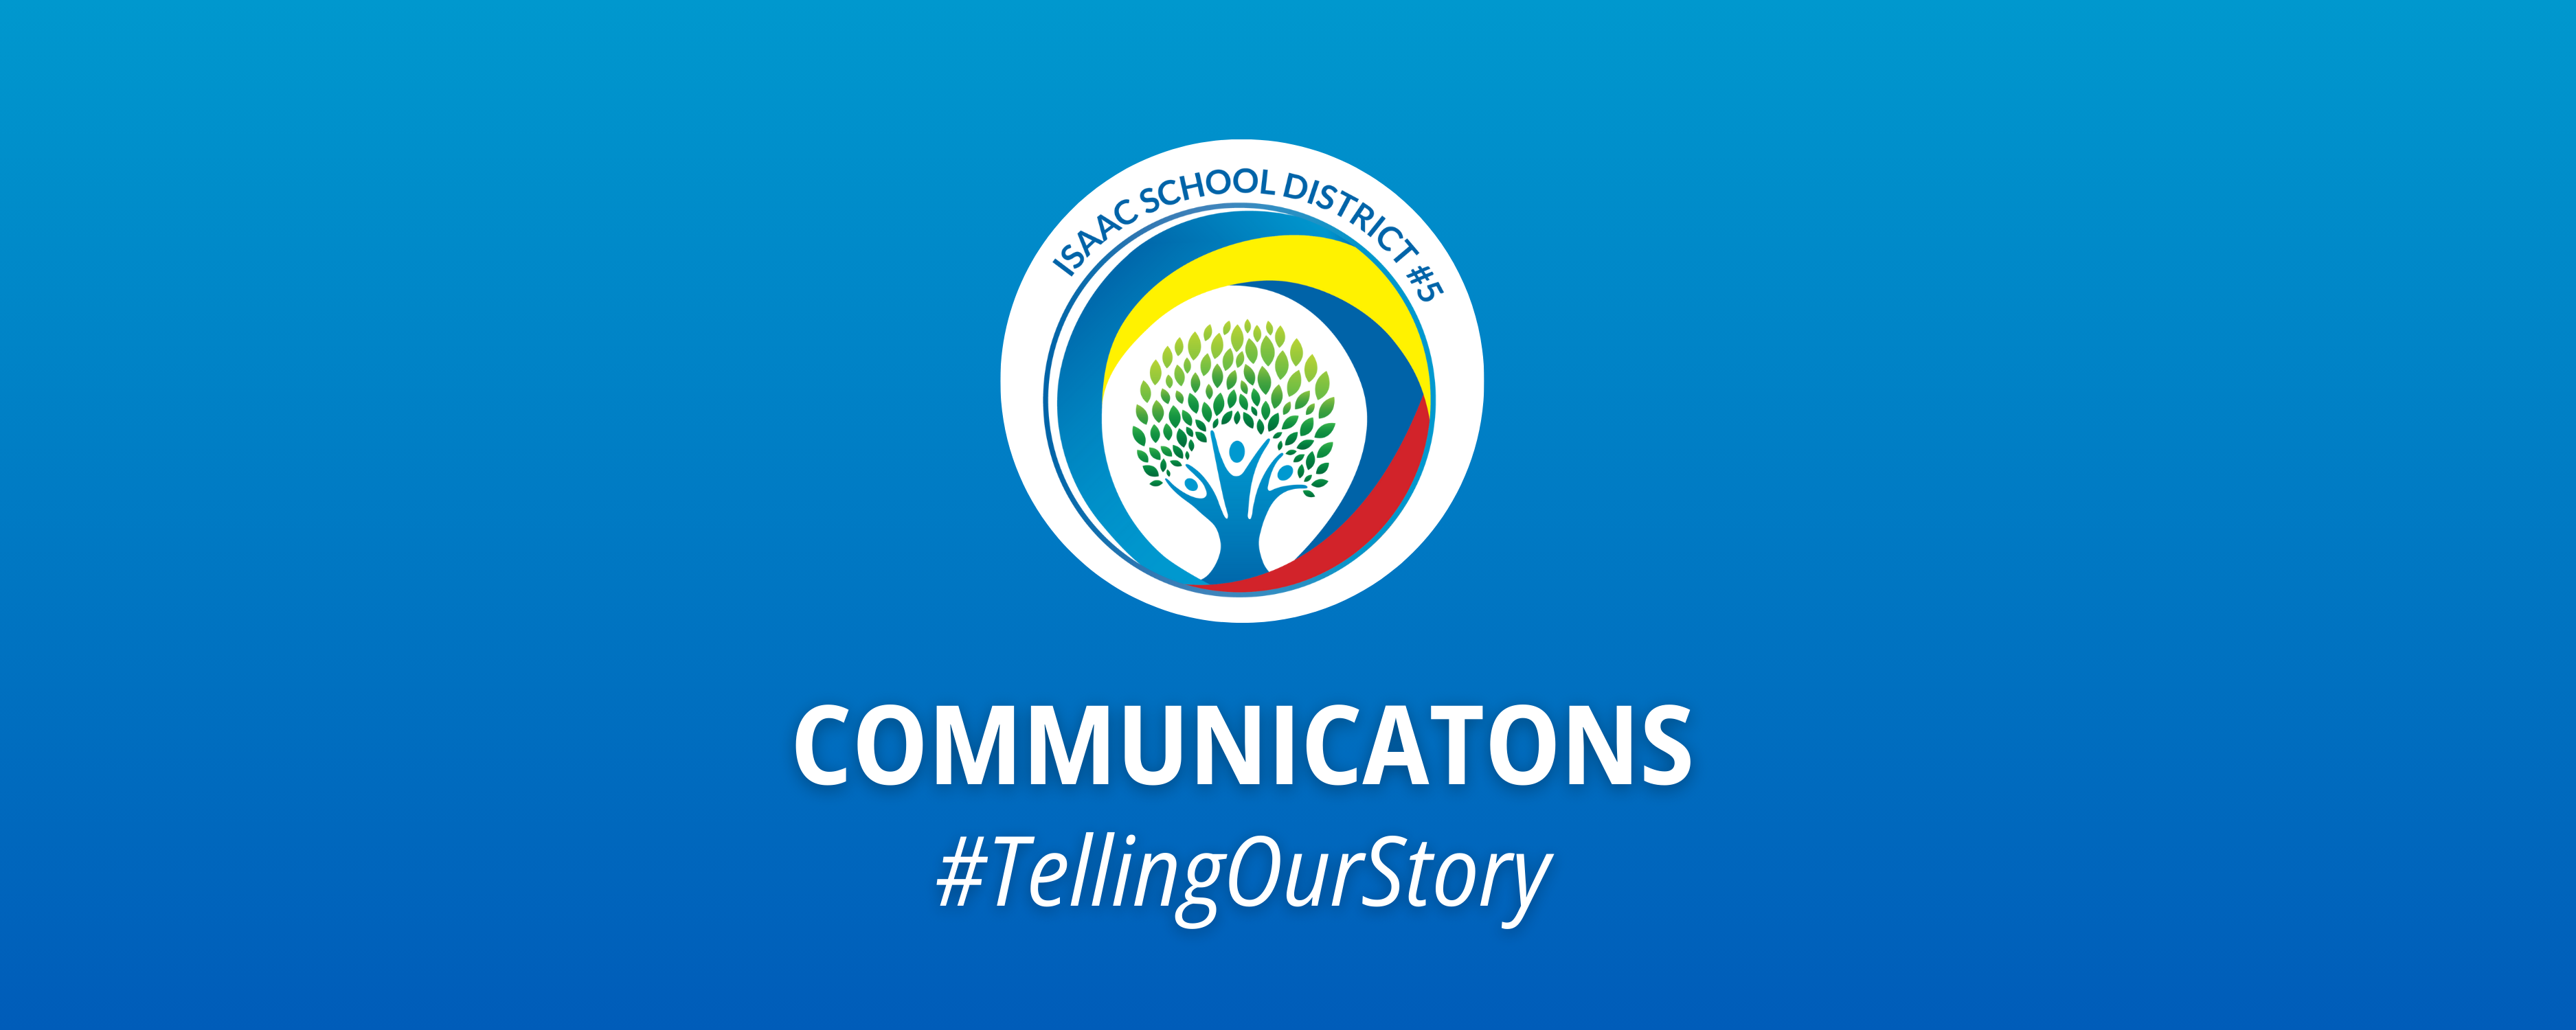 ISD Communications #TellingOurStory